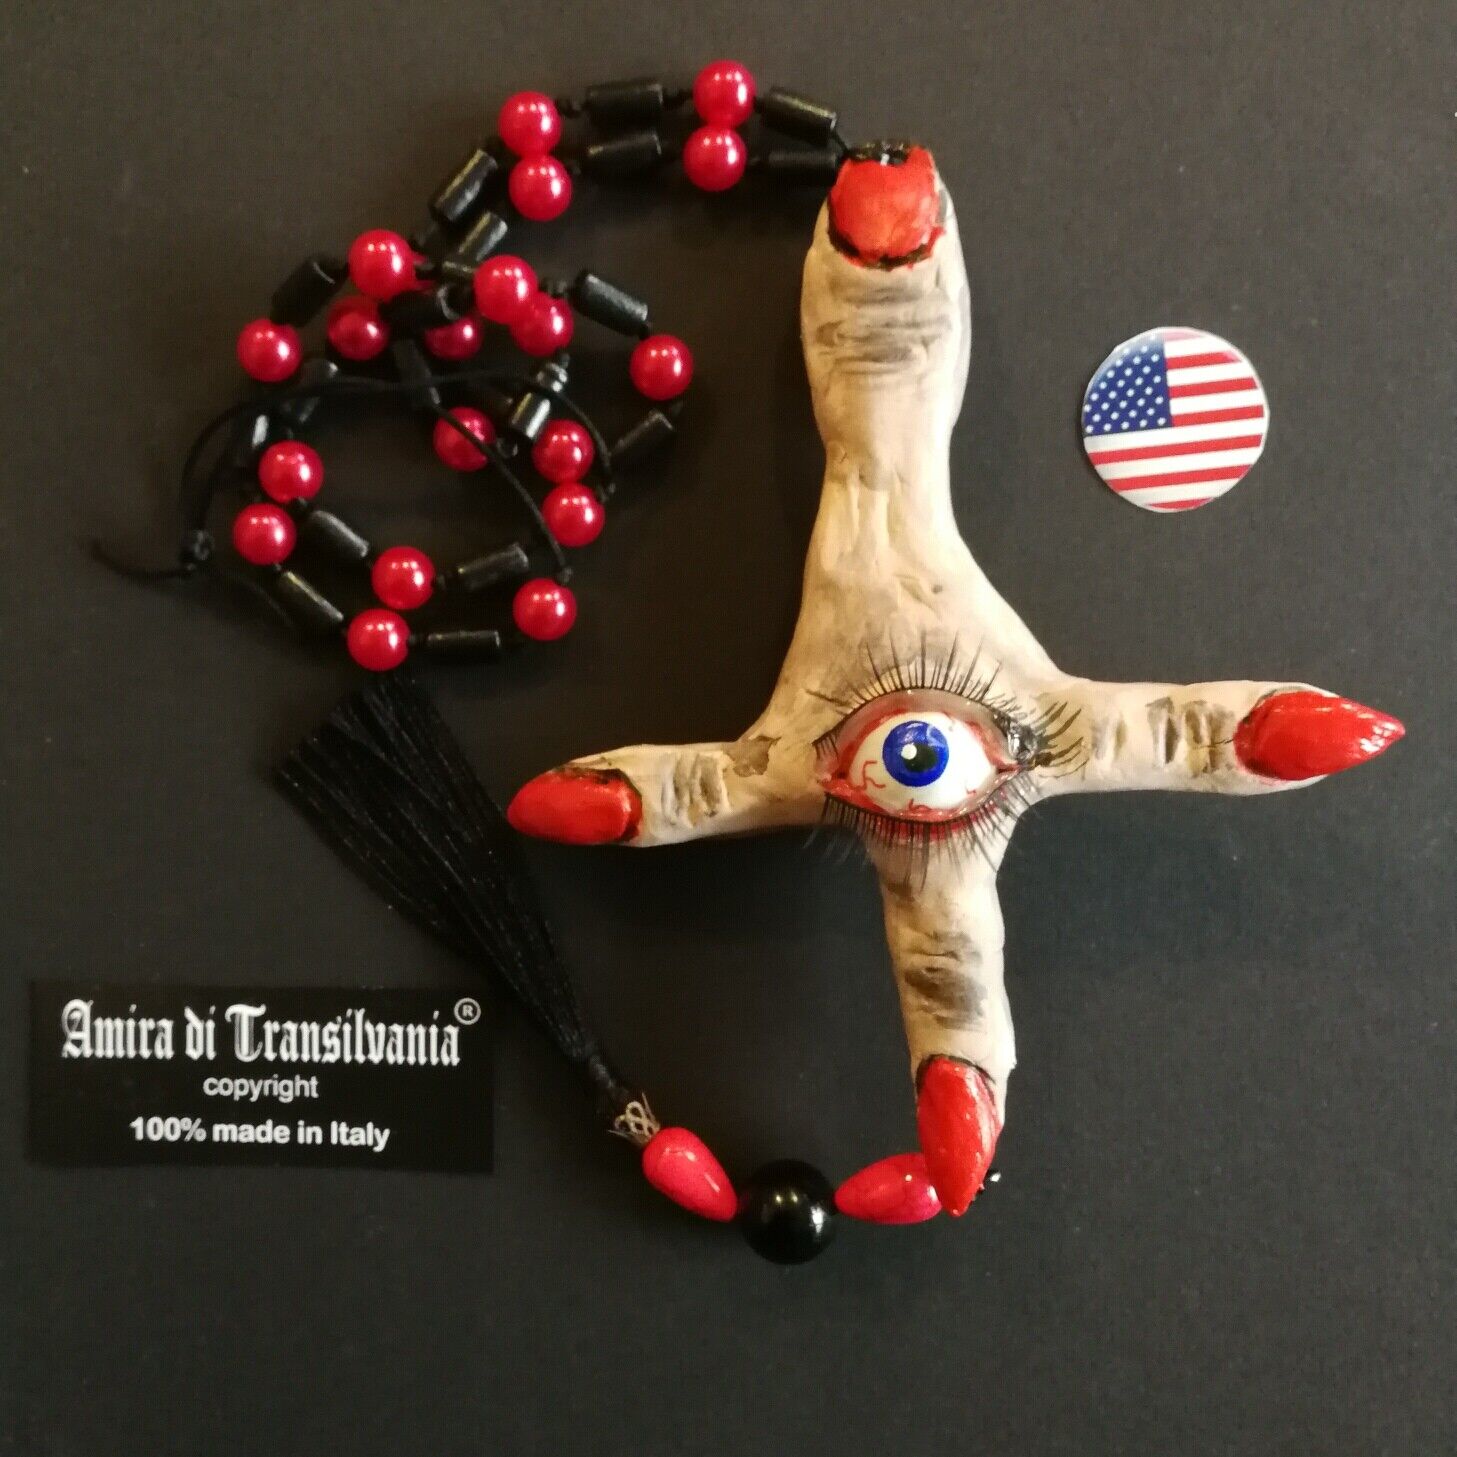 antichrist gothic cross necklace pendant amulet satan pagan jewel jewelry devil